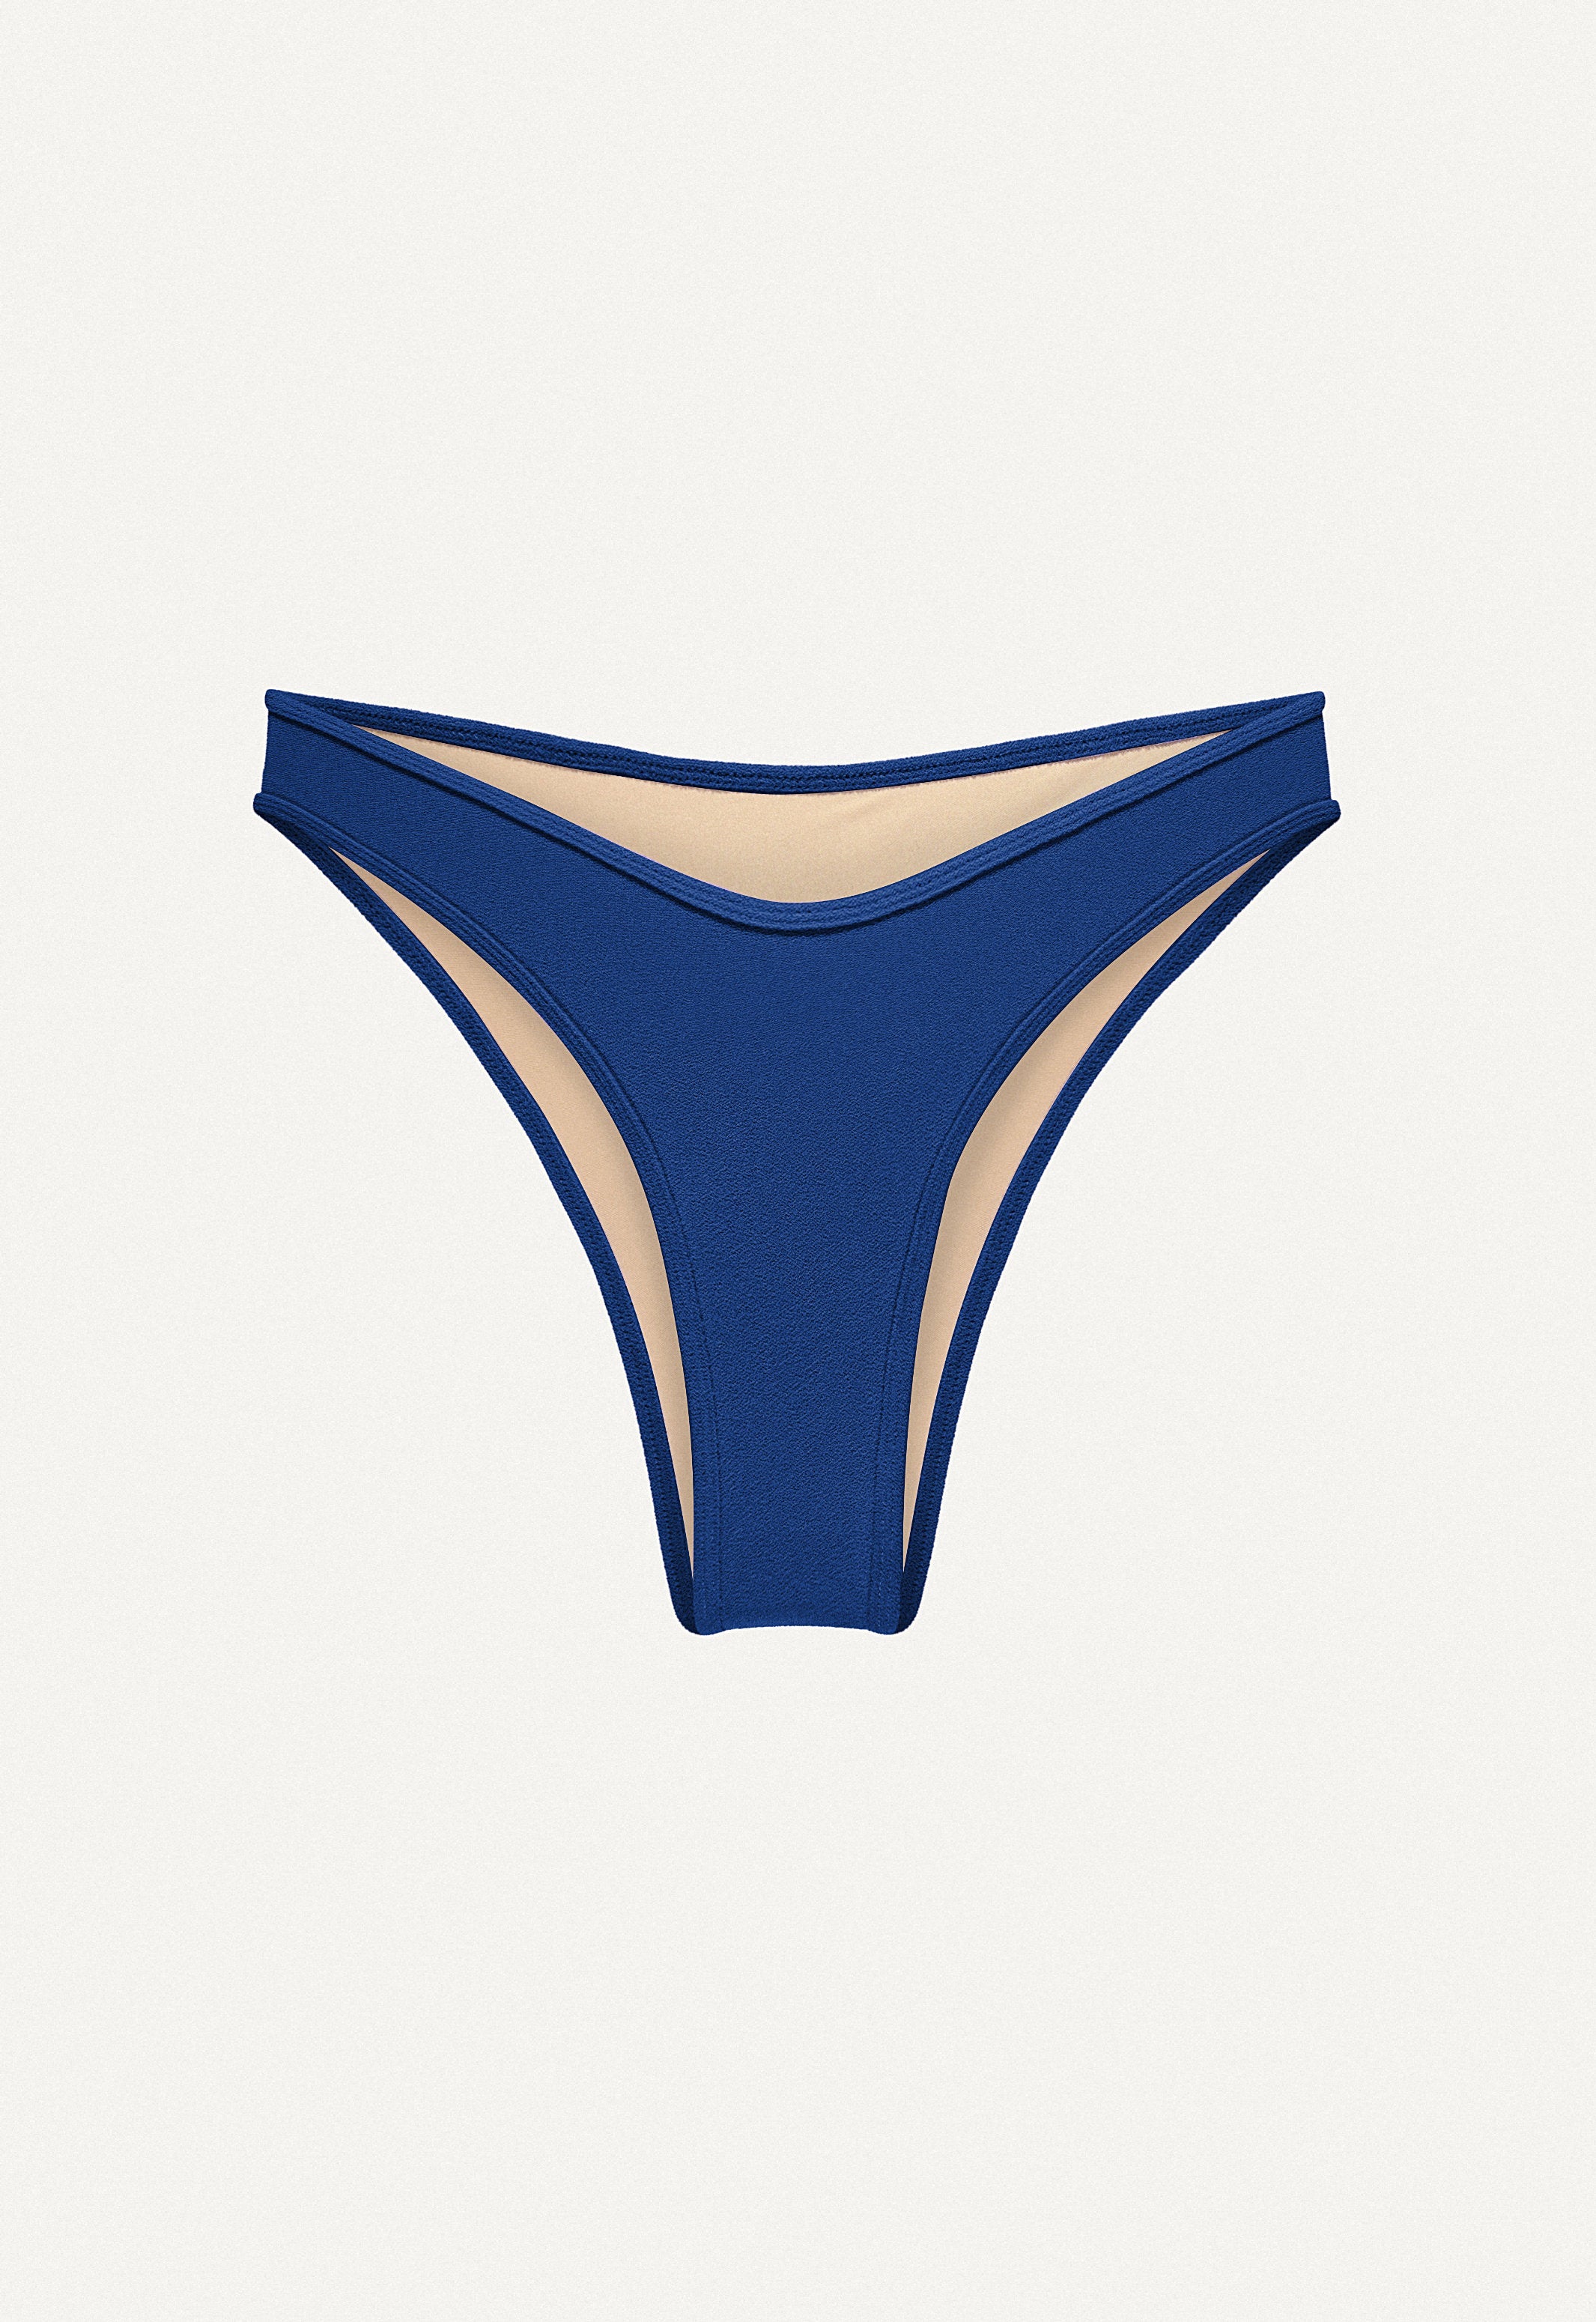 Bikini Bottom "Notos" in dark blue terry